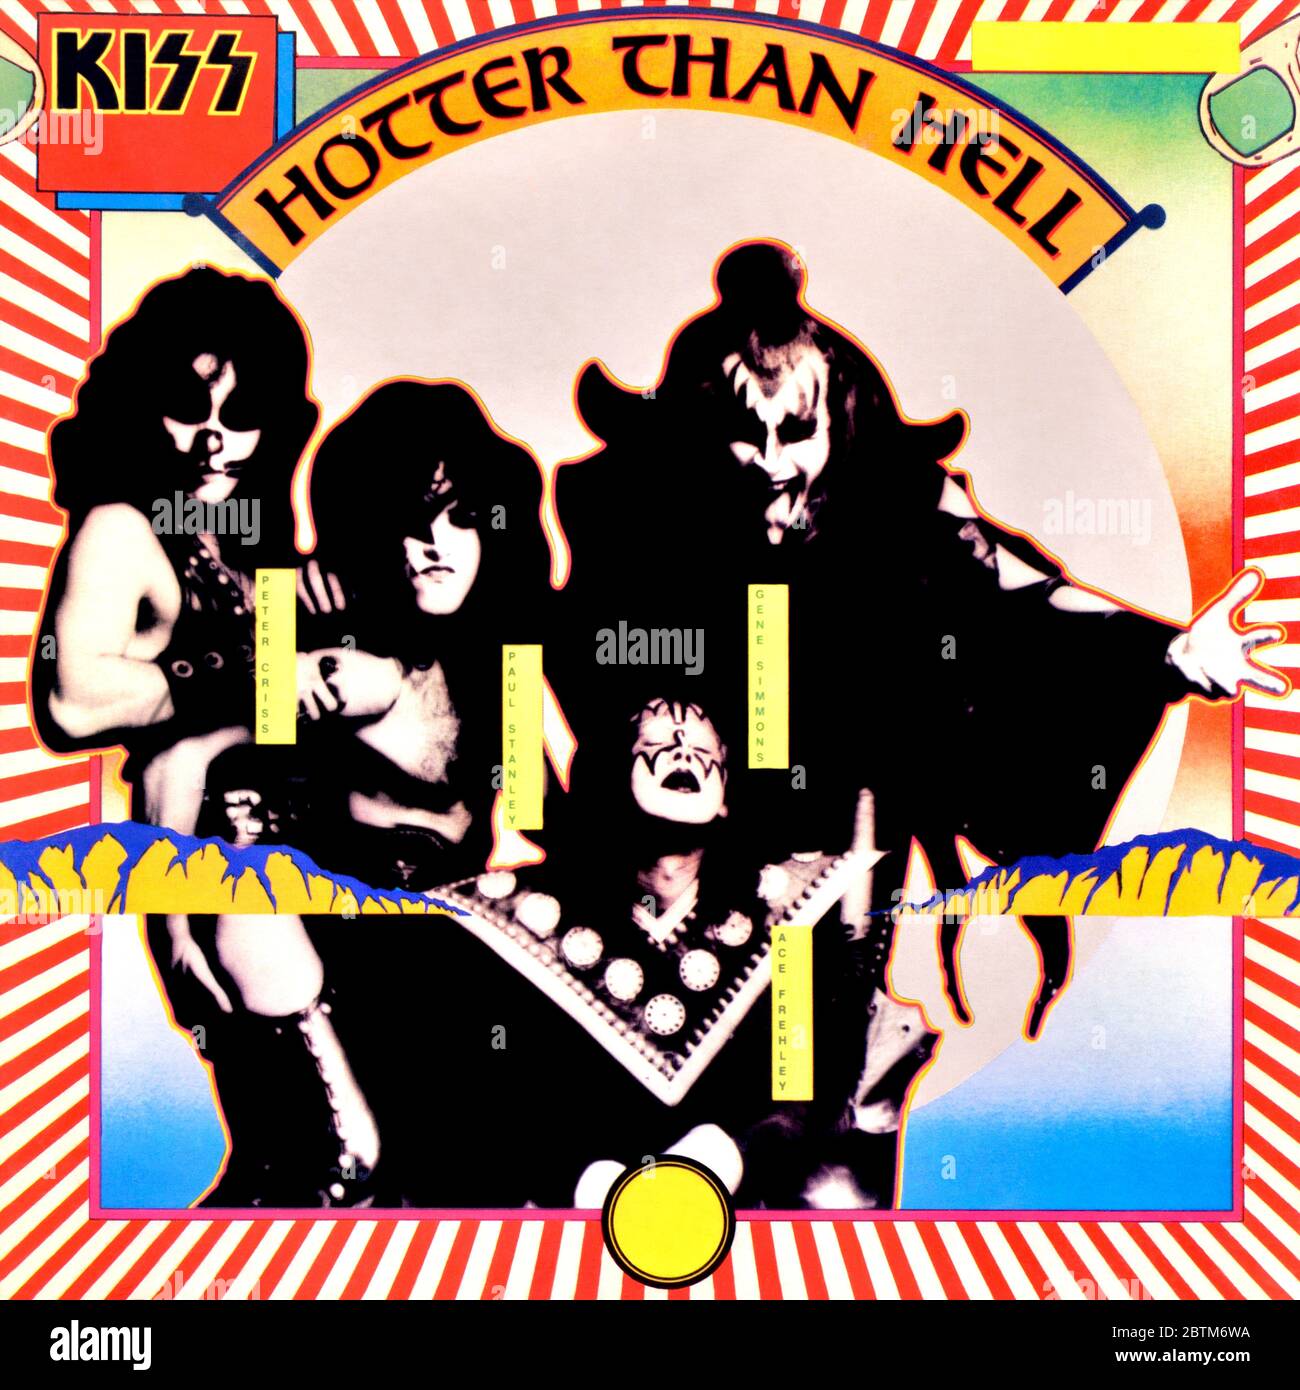 Kiss - original vinyl album cover - Hotter Than Hell - 1974 Stock